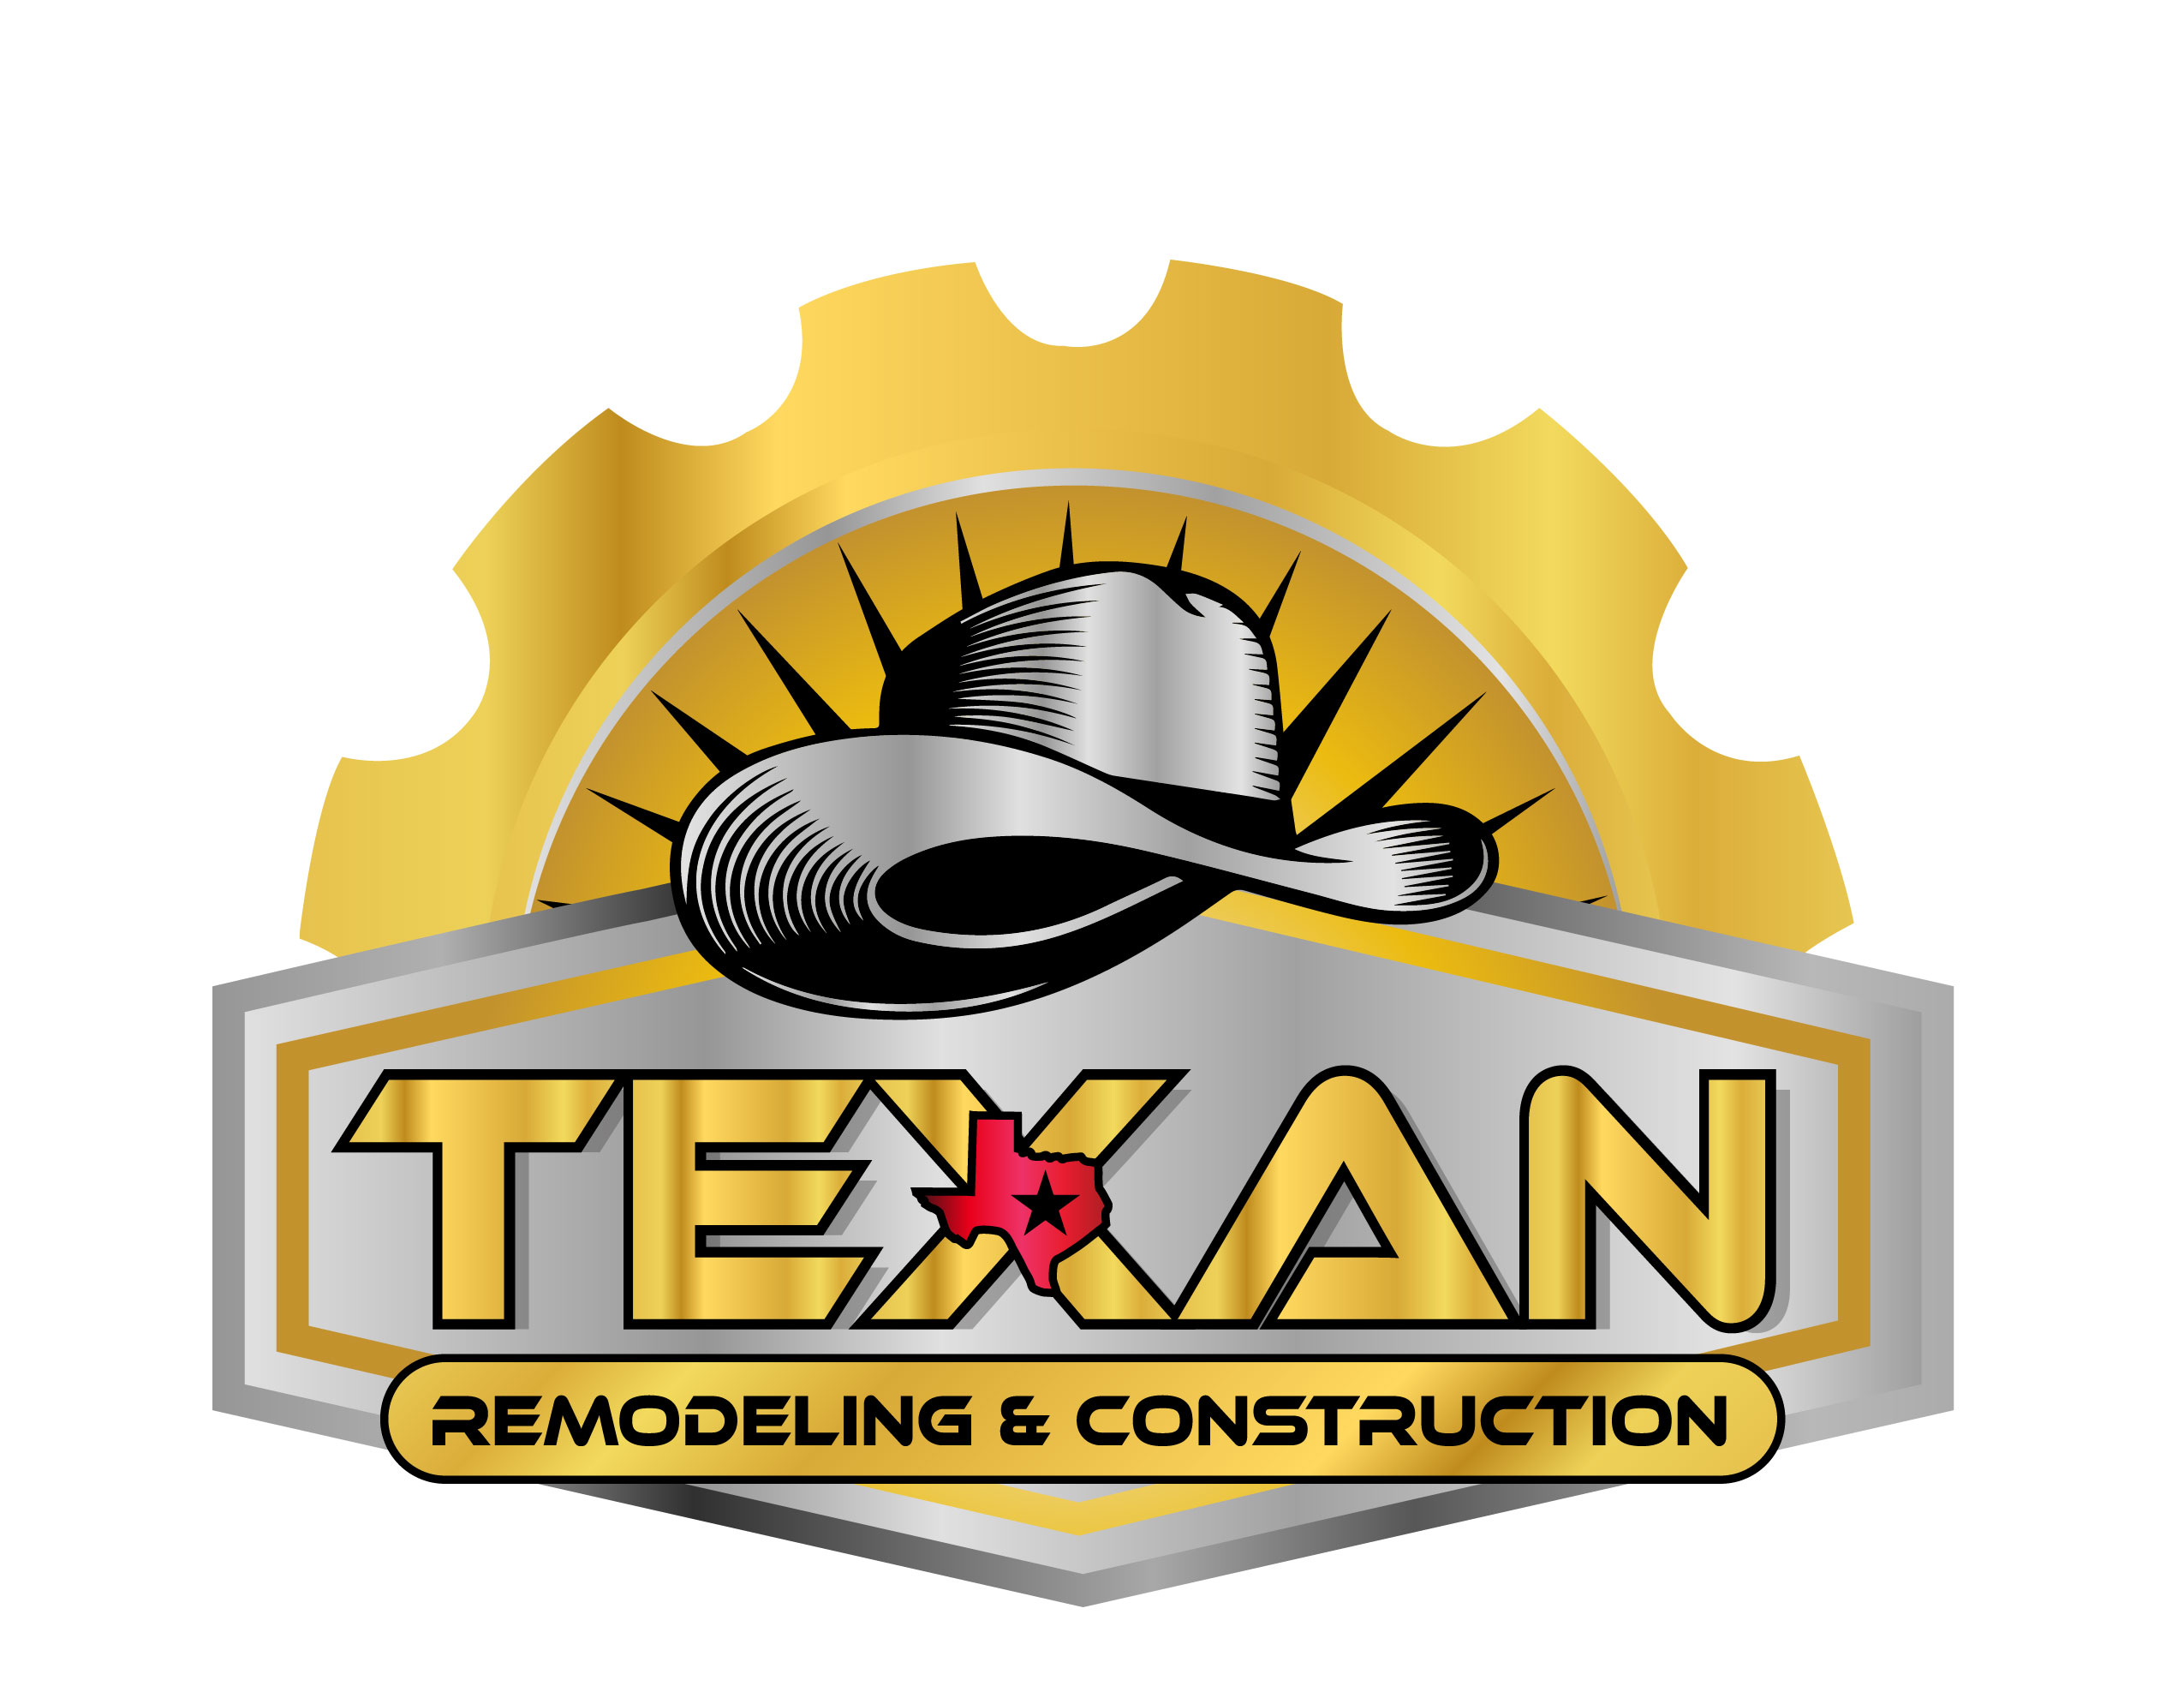 Texan Remodeling & Construction, LLC logo